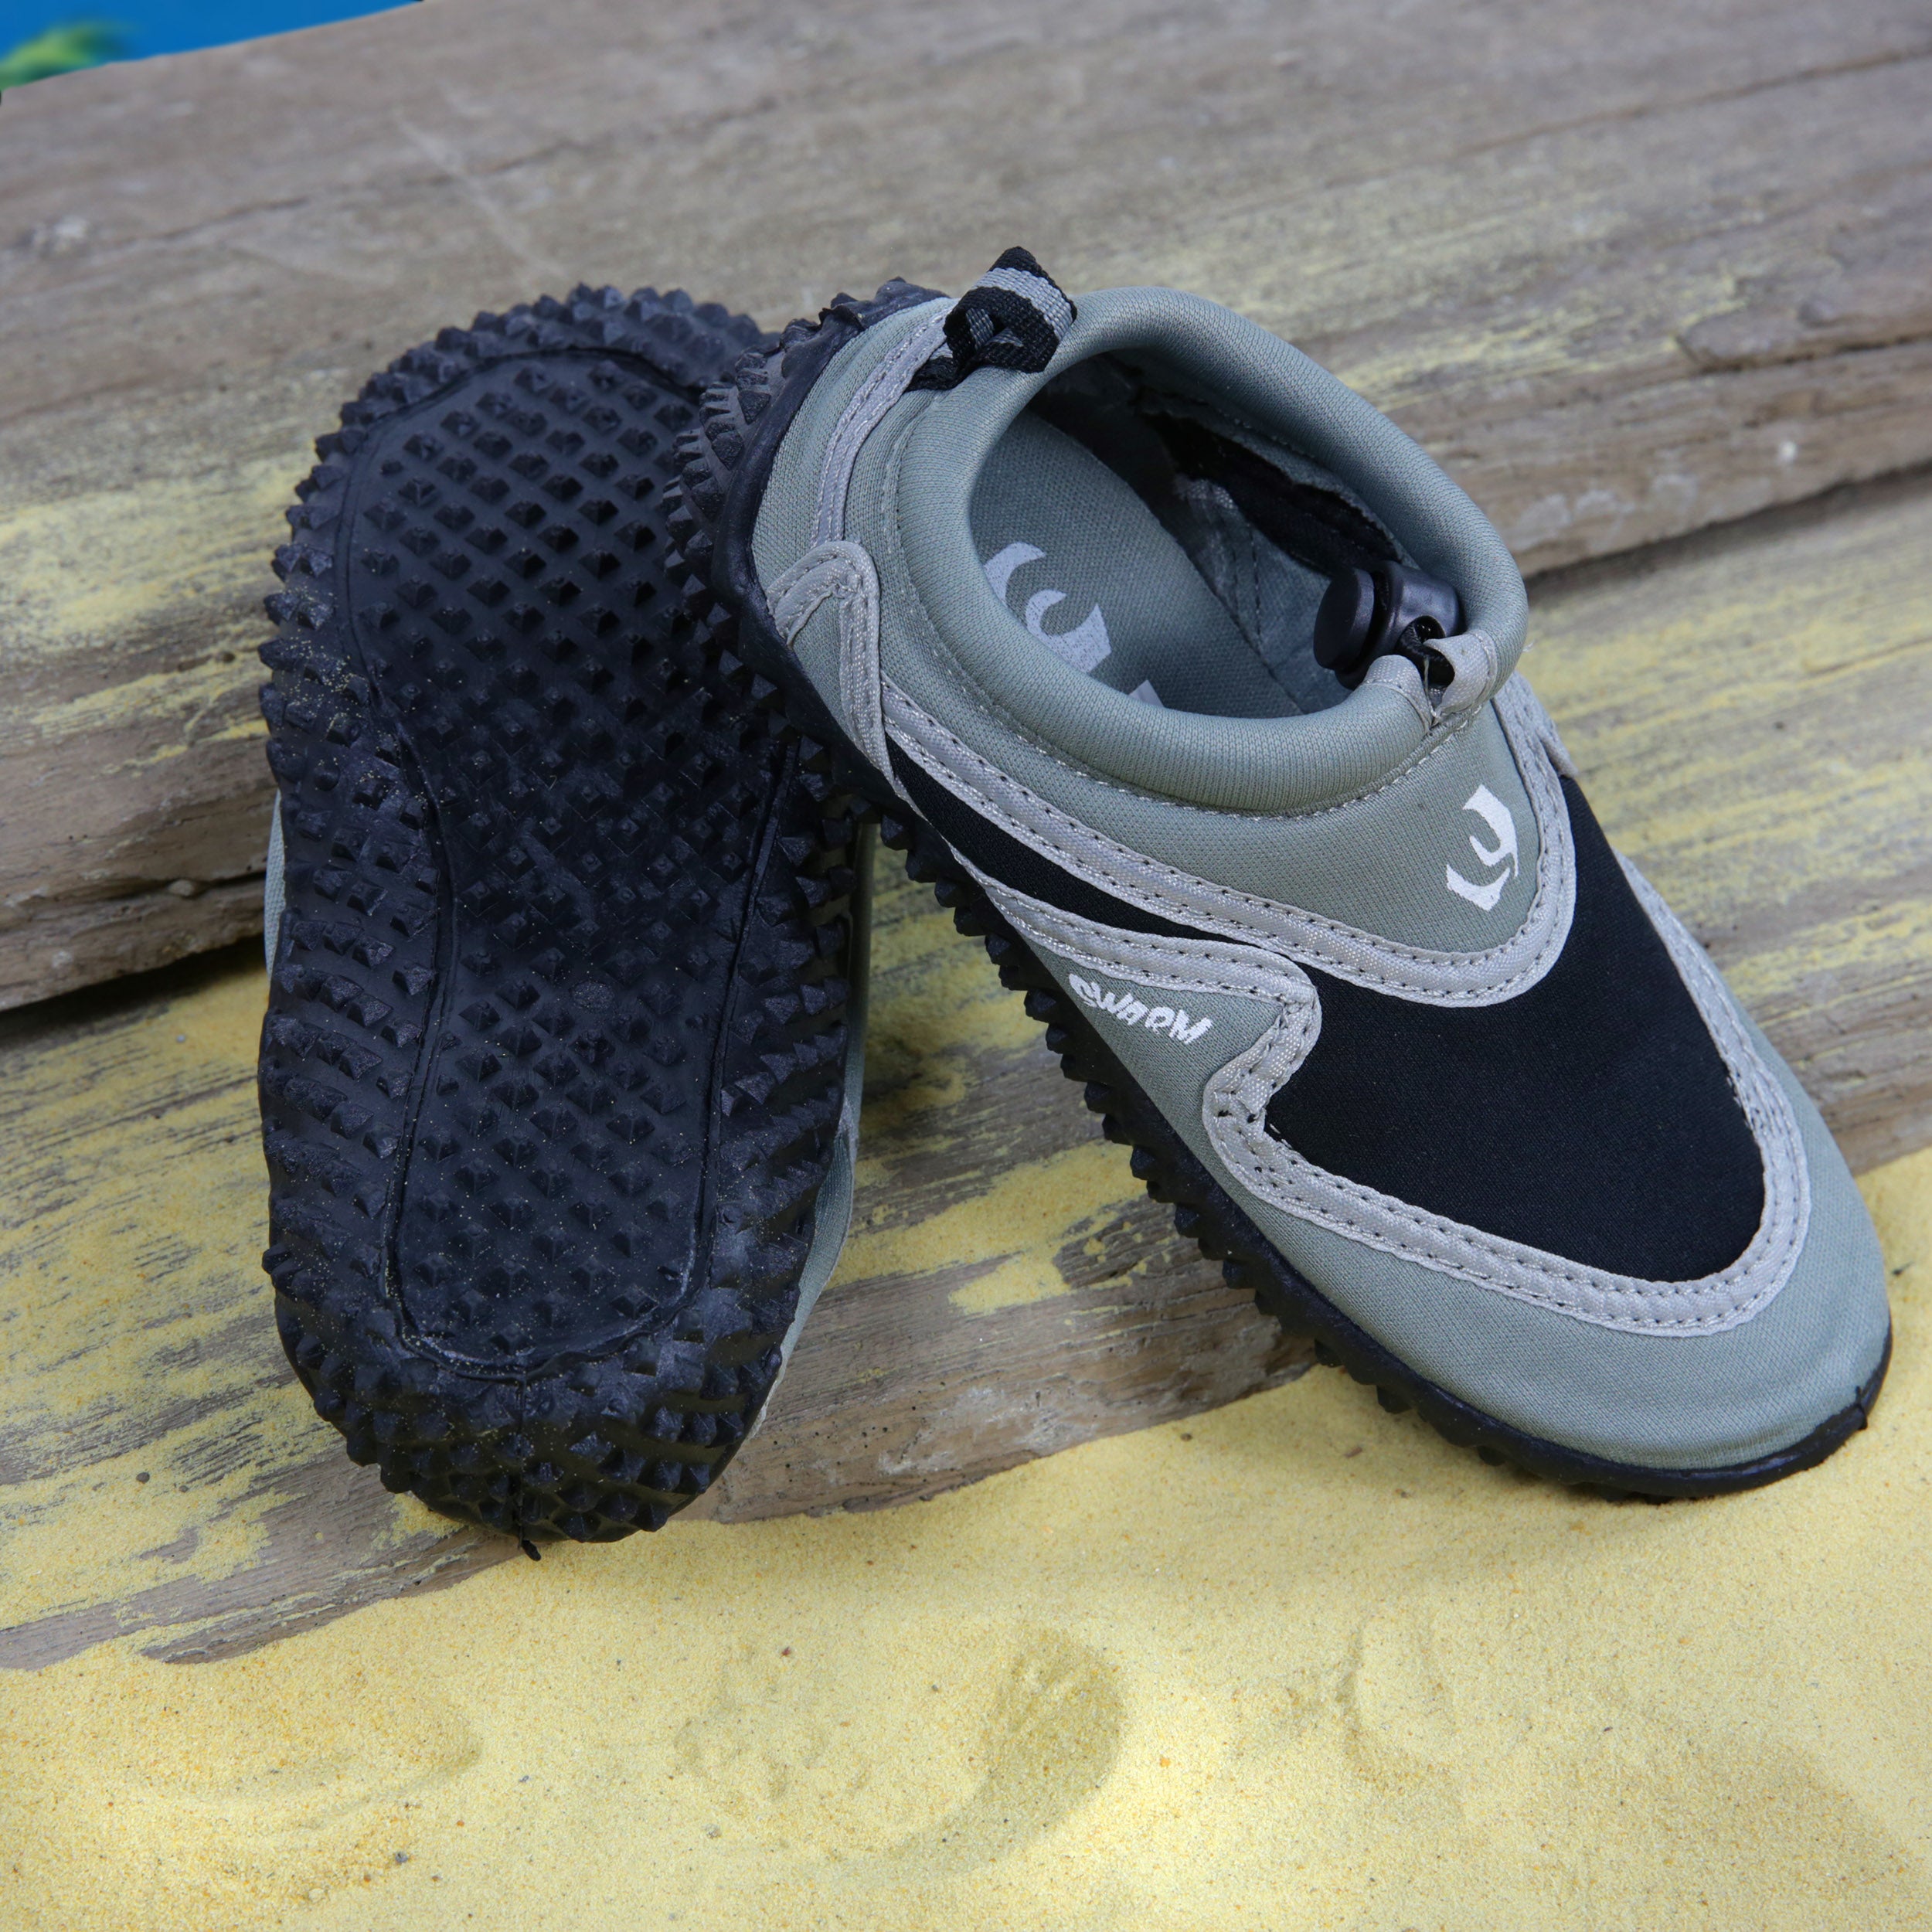 Typhoon Swarm Aqua Beach Shoes Grey/Black - Infants